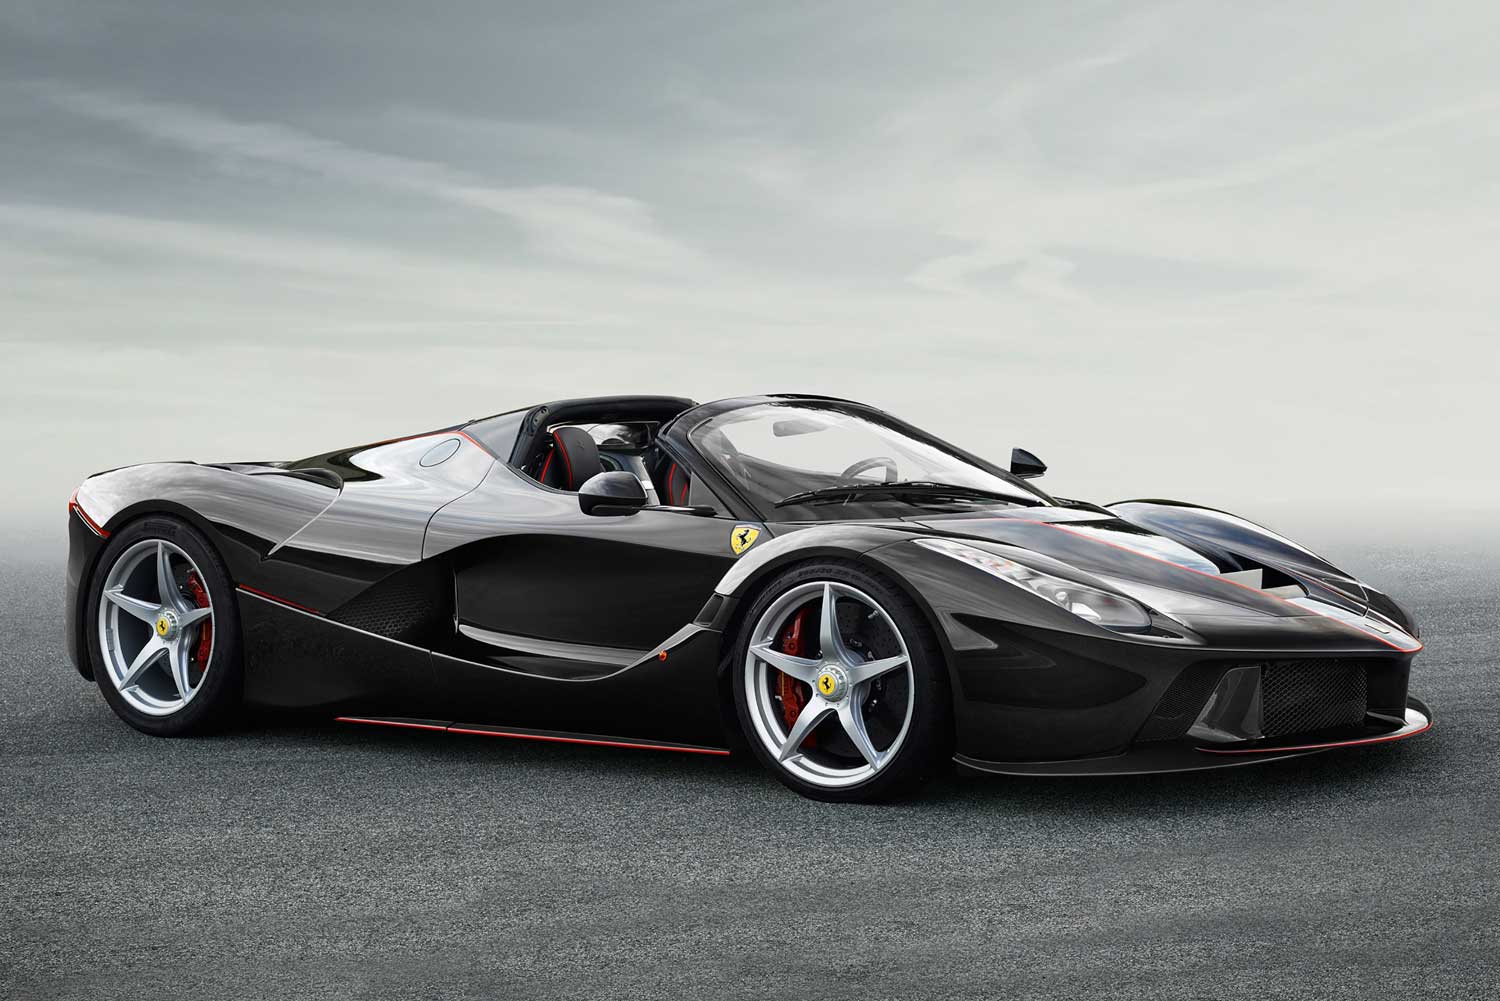 Ferrari flagship: the $2m, 217mph LaFerrari Aperta hyper car